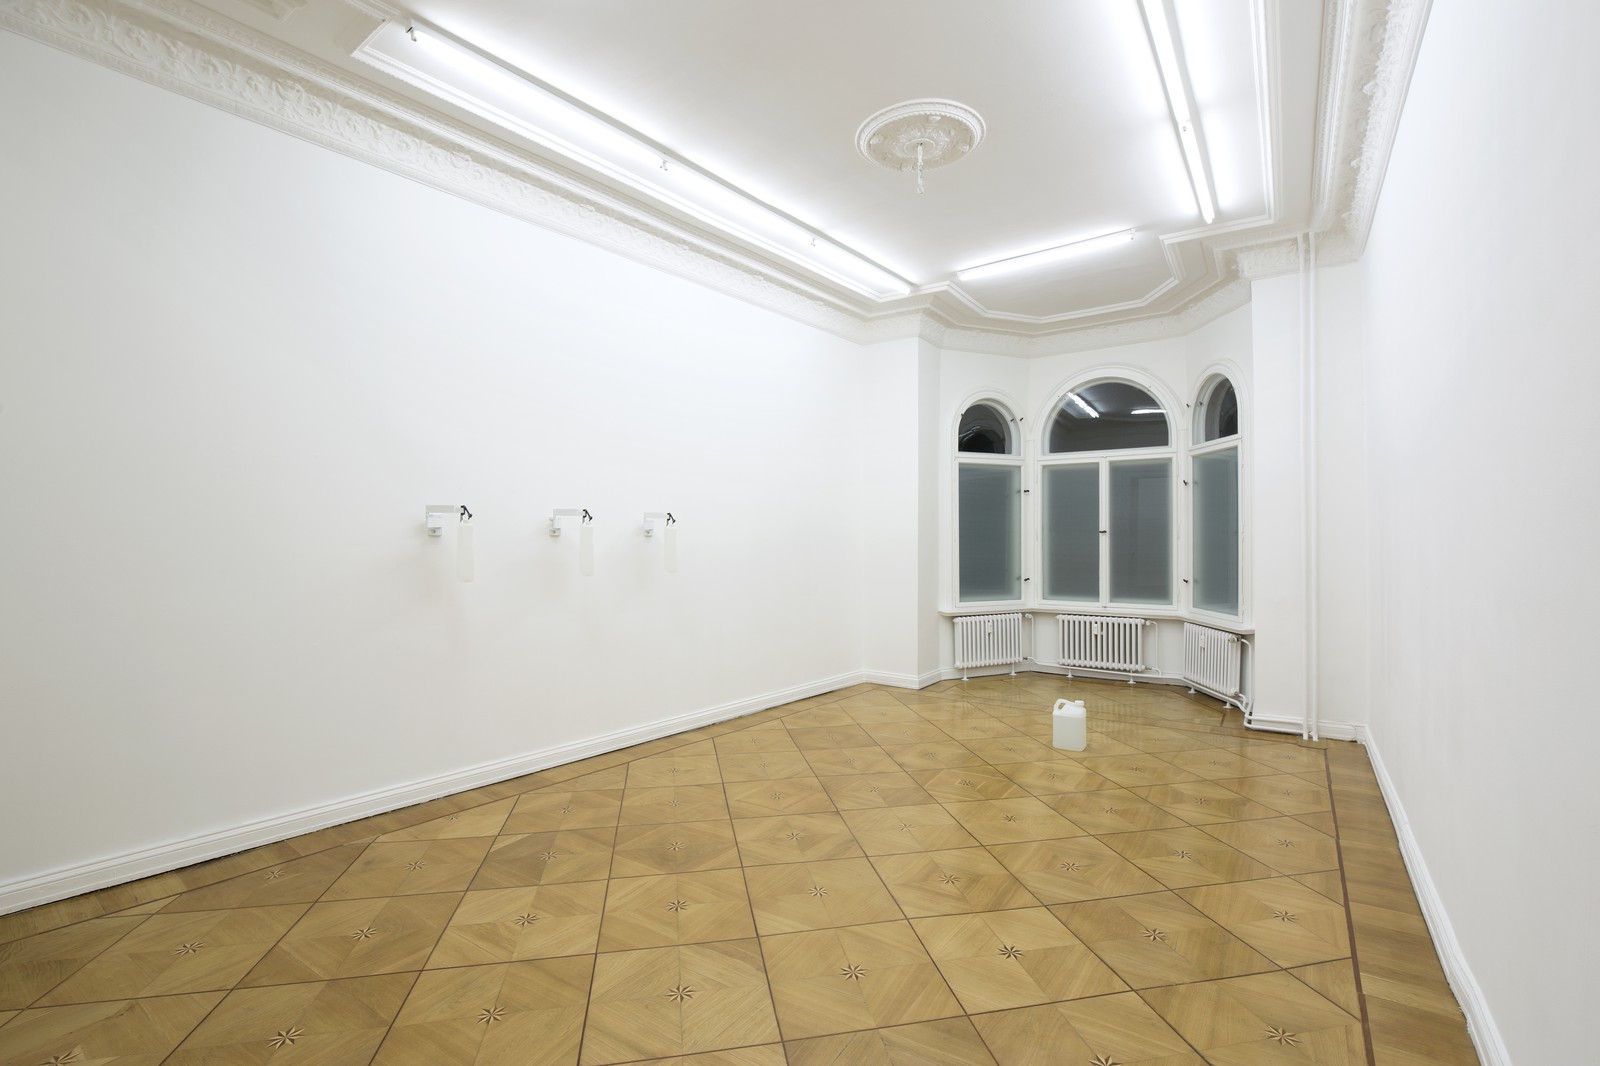 Installation view, Deformulation, Société, Berlin, 2015